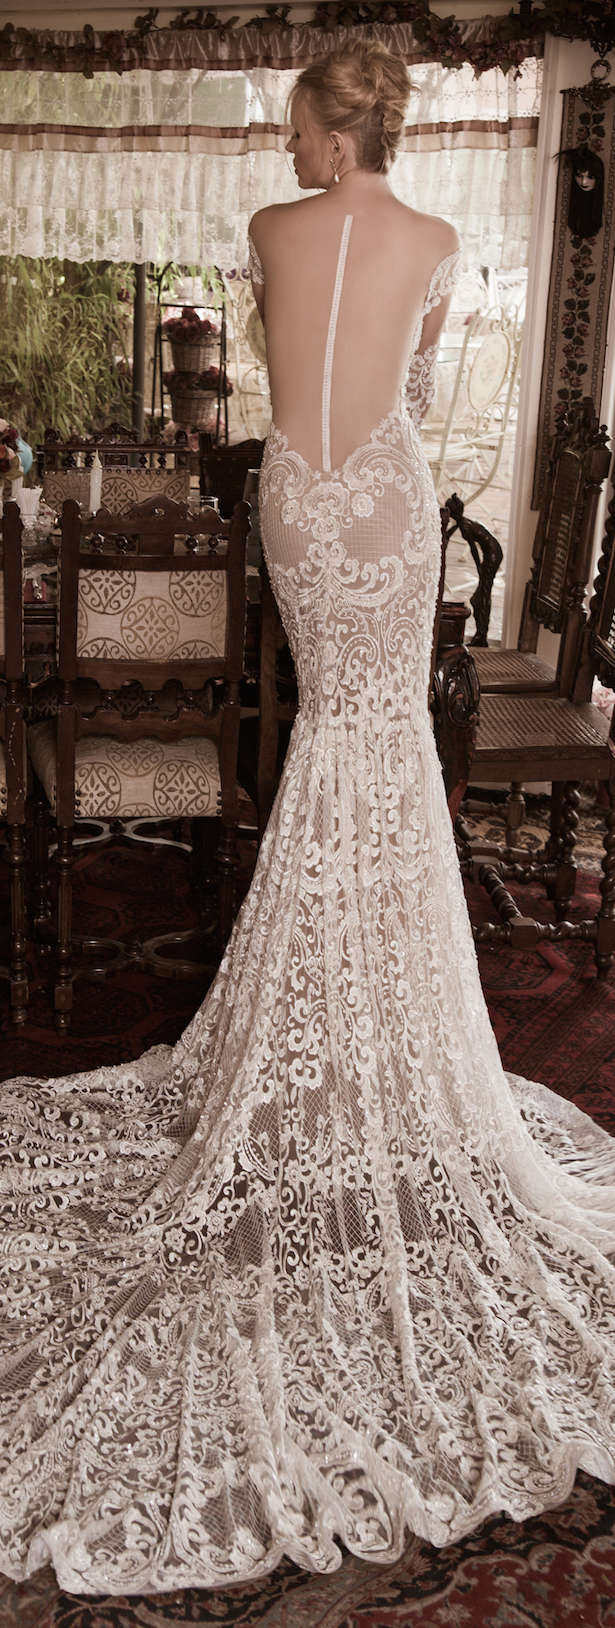 Naama Anat Fall 2016 Wedding Dress